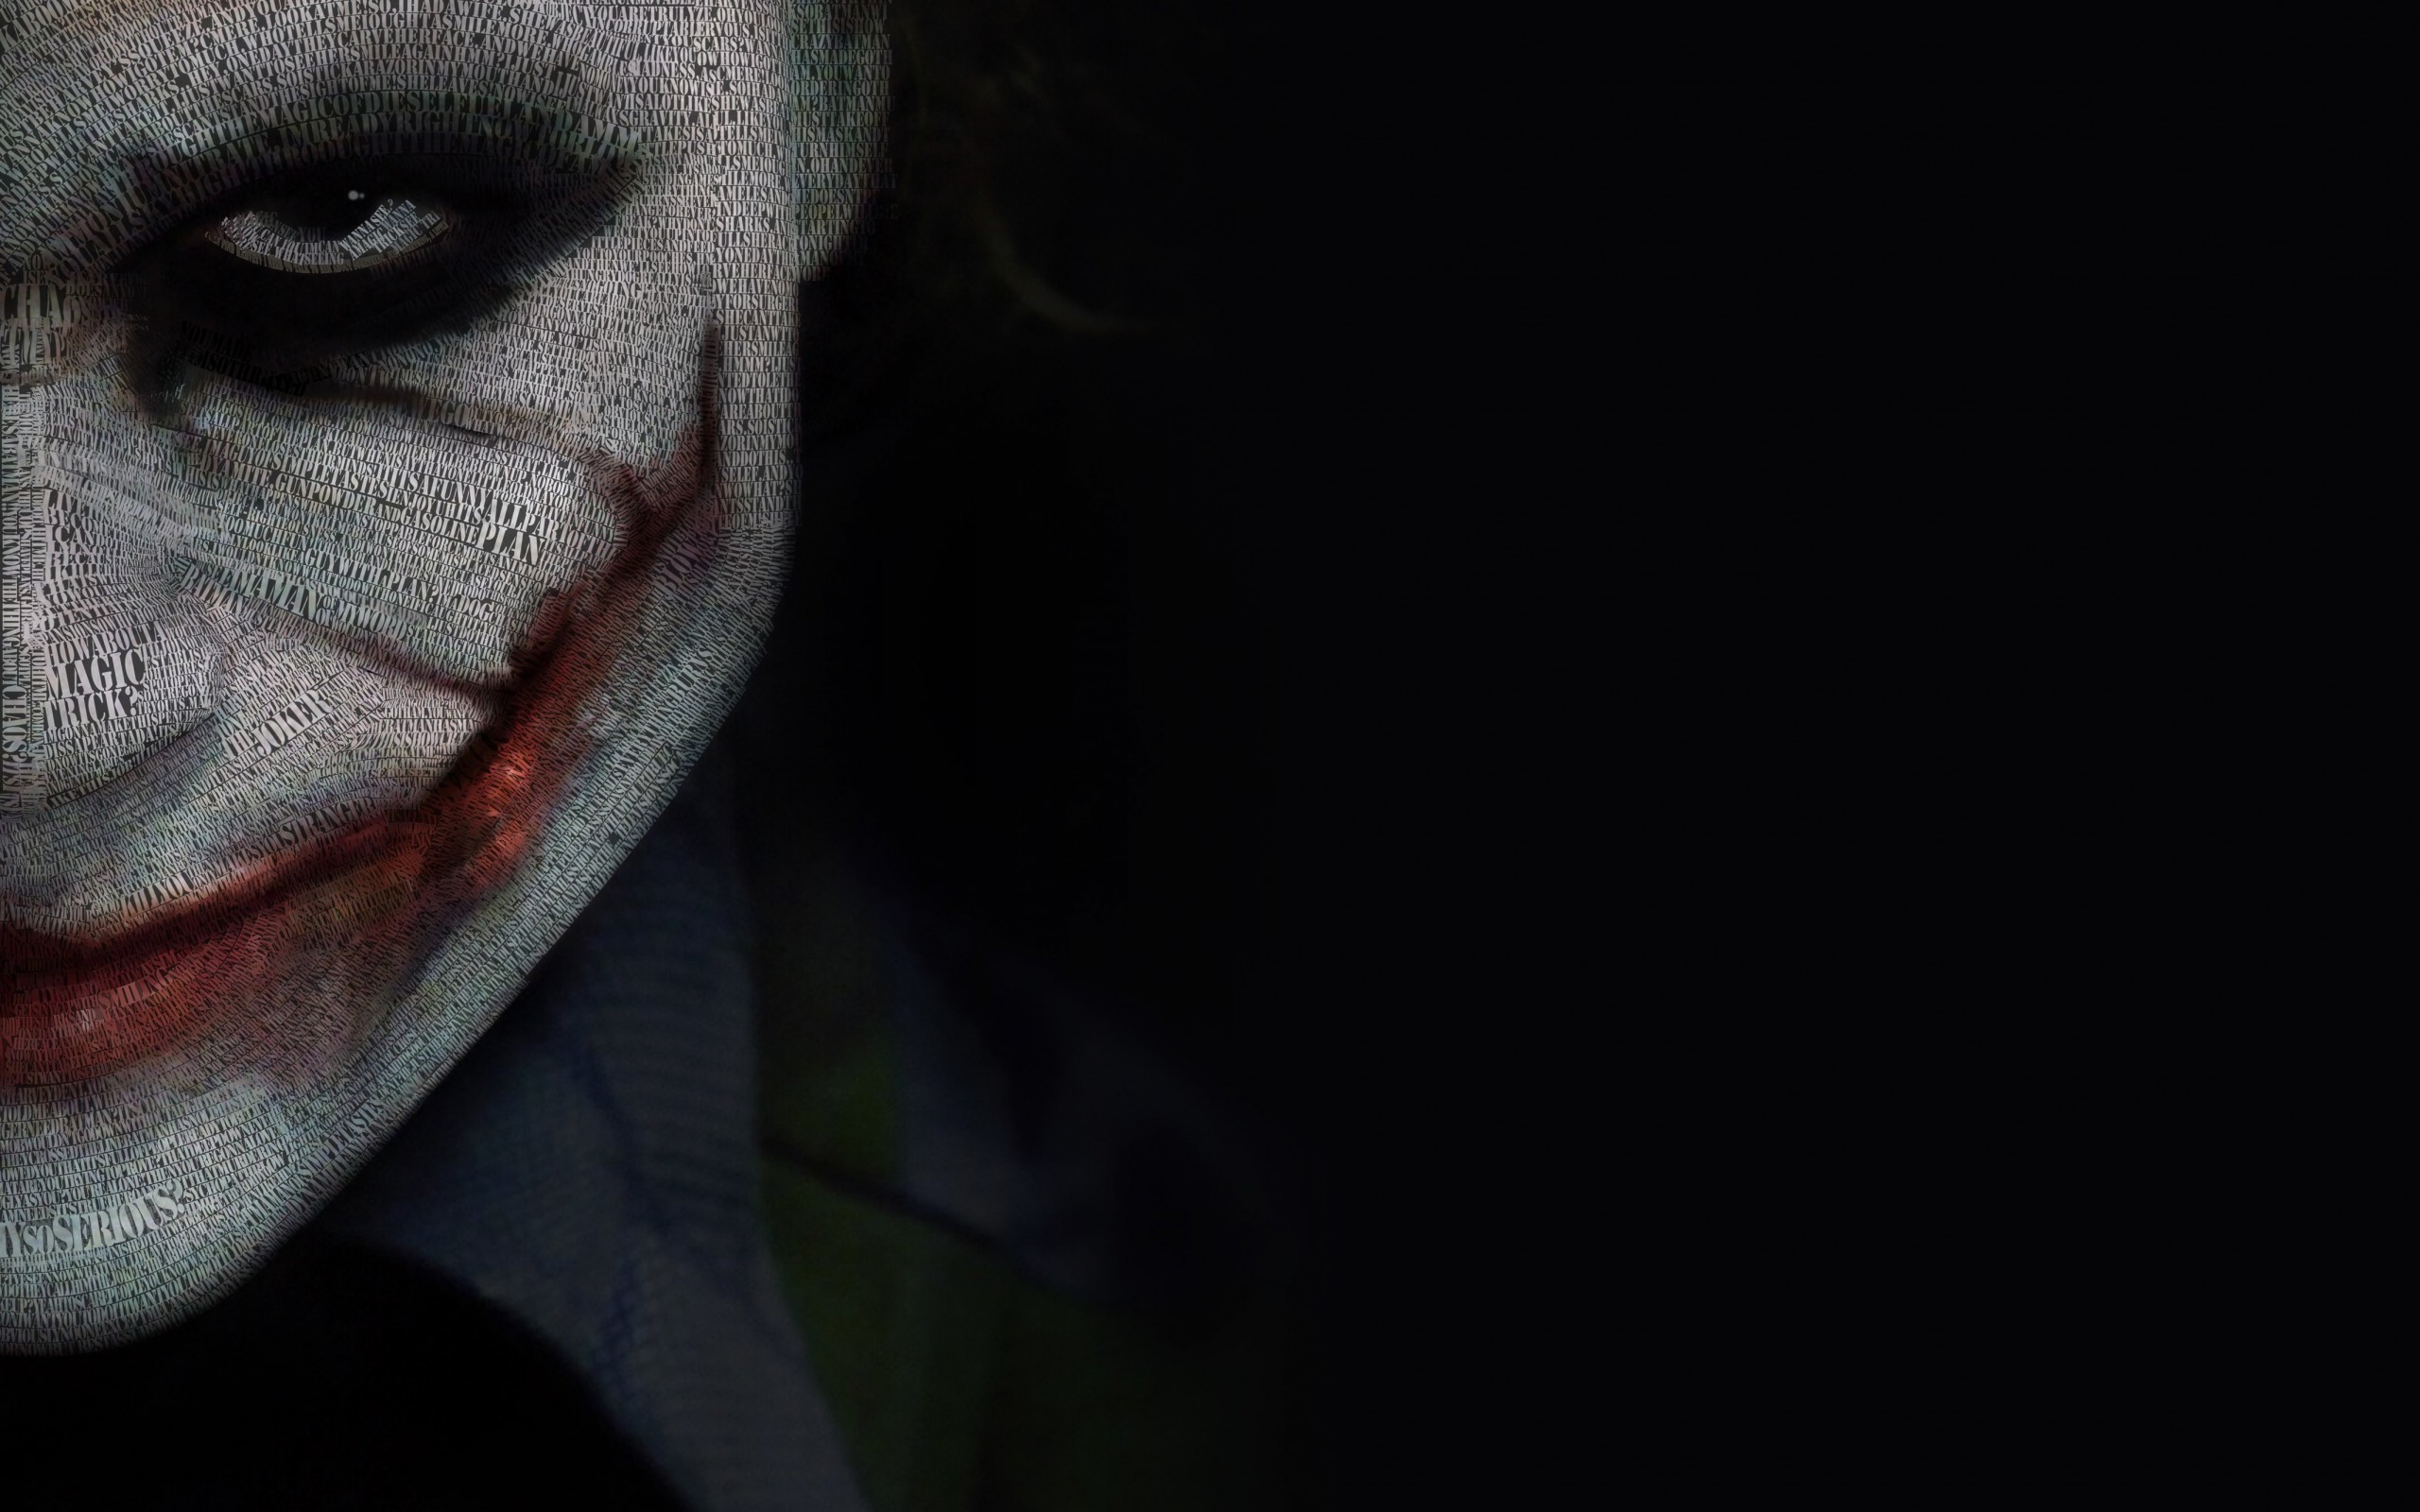 The Joker Typeface Portrait Wallpaper for Desktop 2560x1600